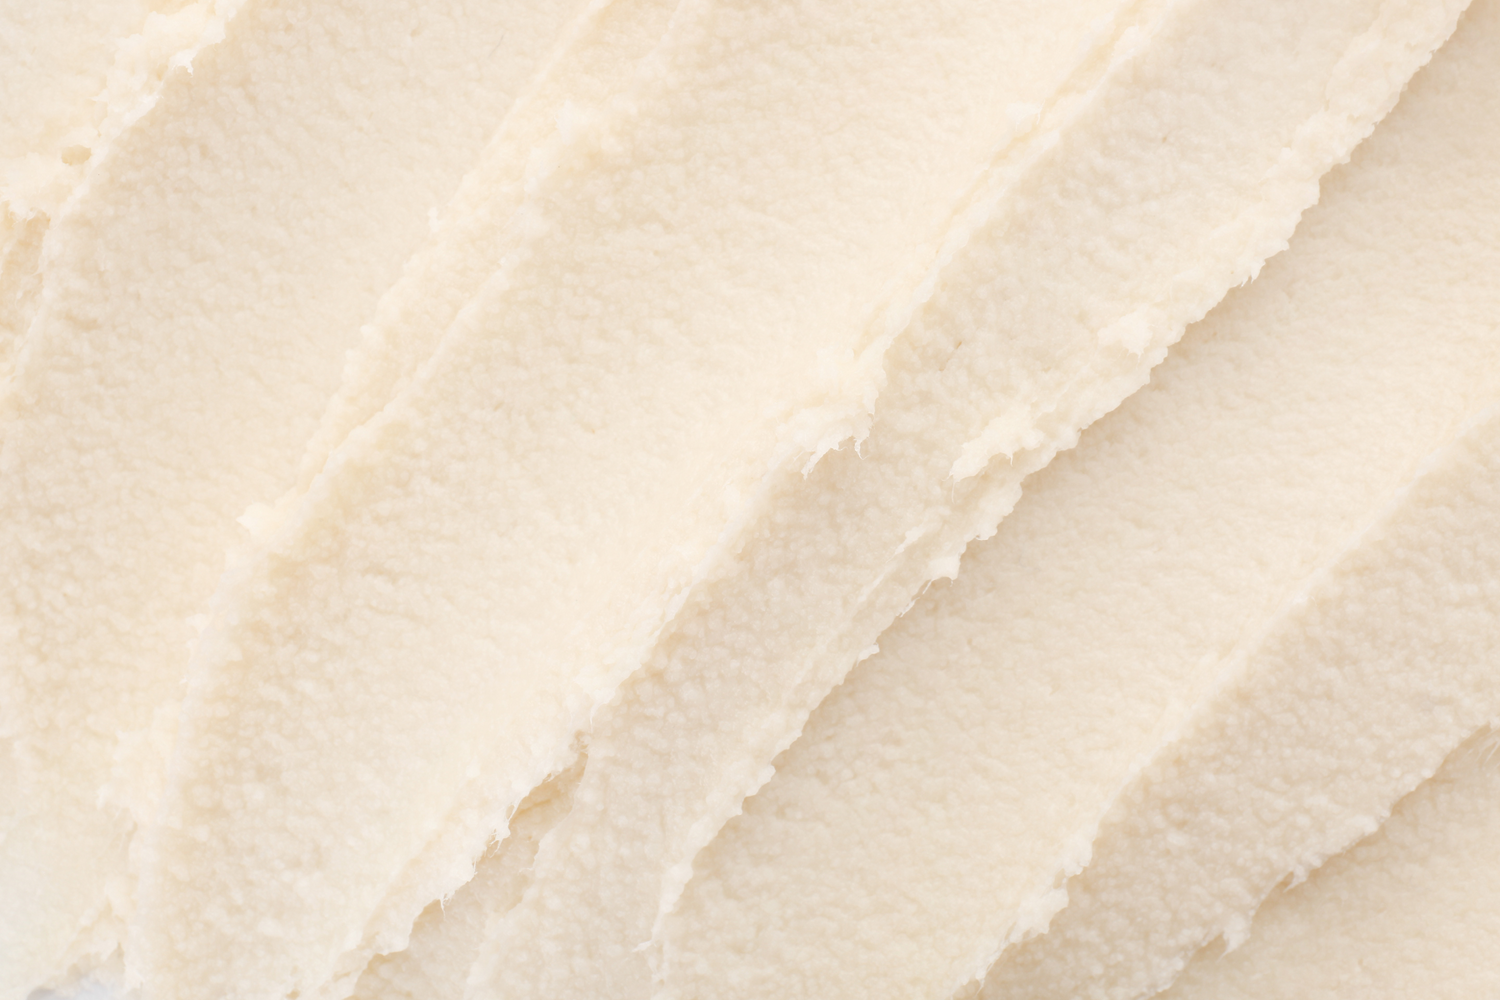 shea butter benefits - shea butter natural ingredients flat lay